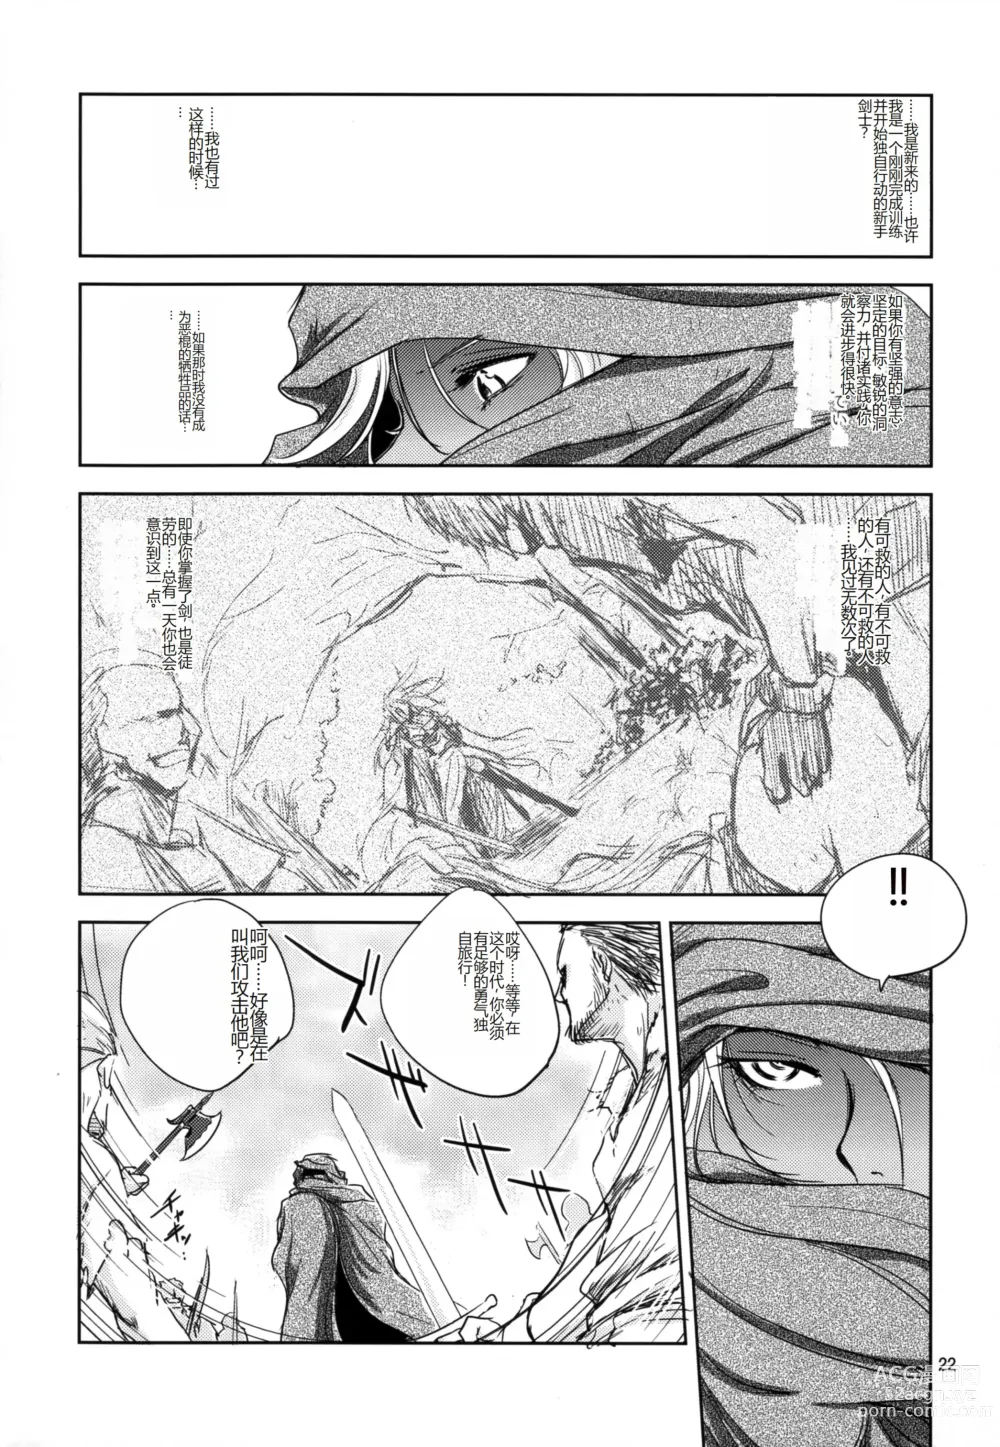 Page 22 of doujinshi GRASSENS WAR ANOTHER STORY Ex #04 Node Shinkou IV